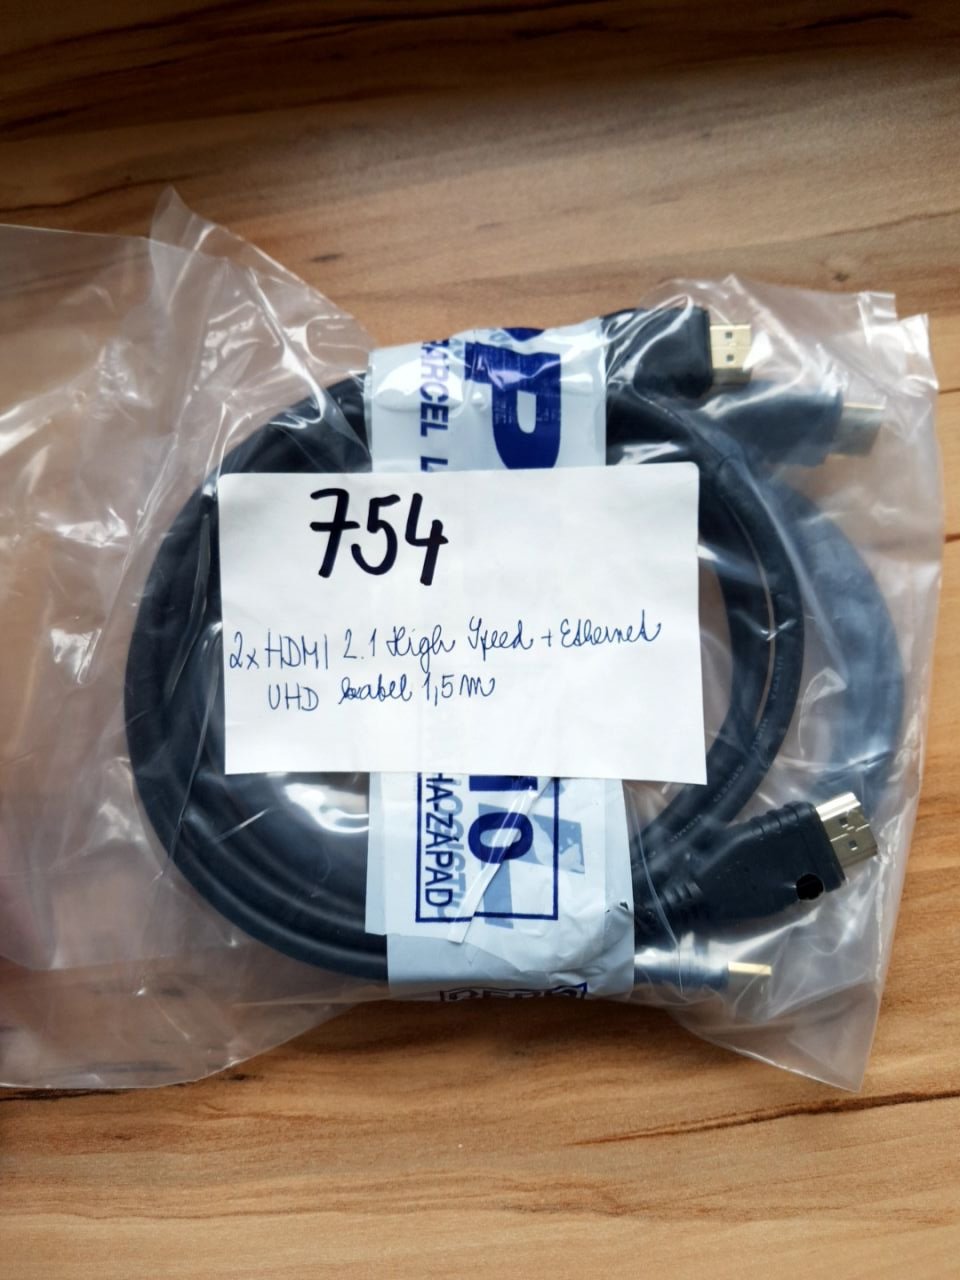 2x HDMI 2.1 High speed + Ethernet UHD kabel, 1,5m